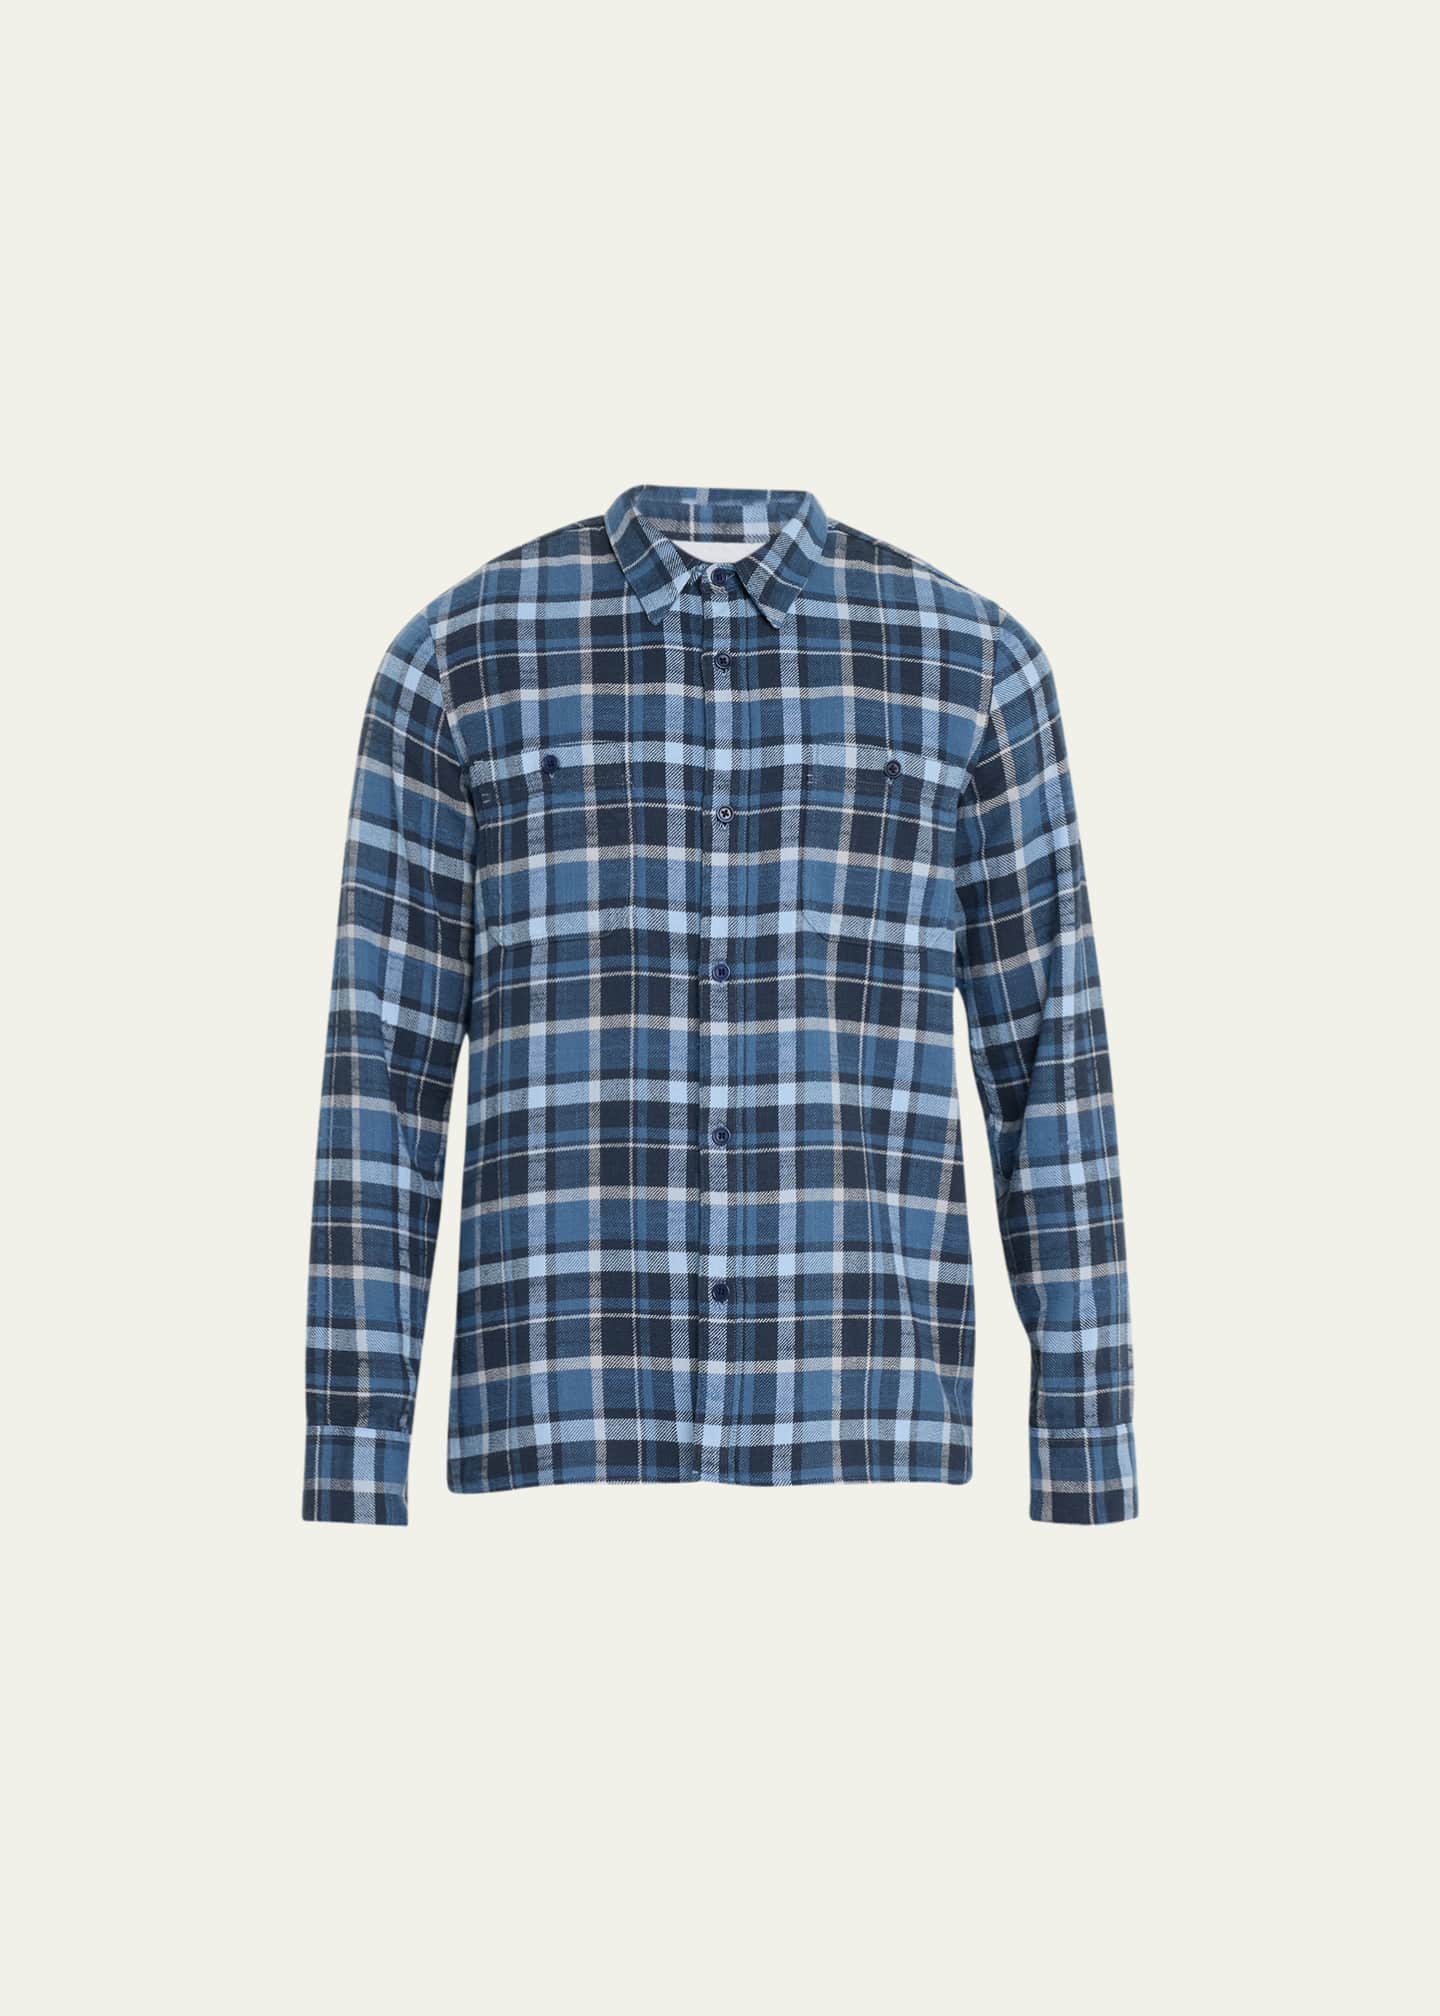 Officine Generale Men's Ahmad Plaid Flannel Sport Shirt - Bergdorf Goodman